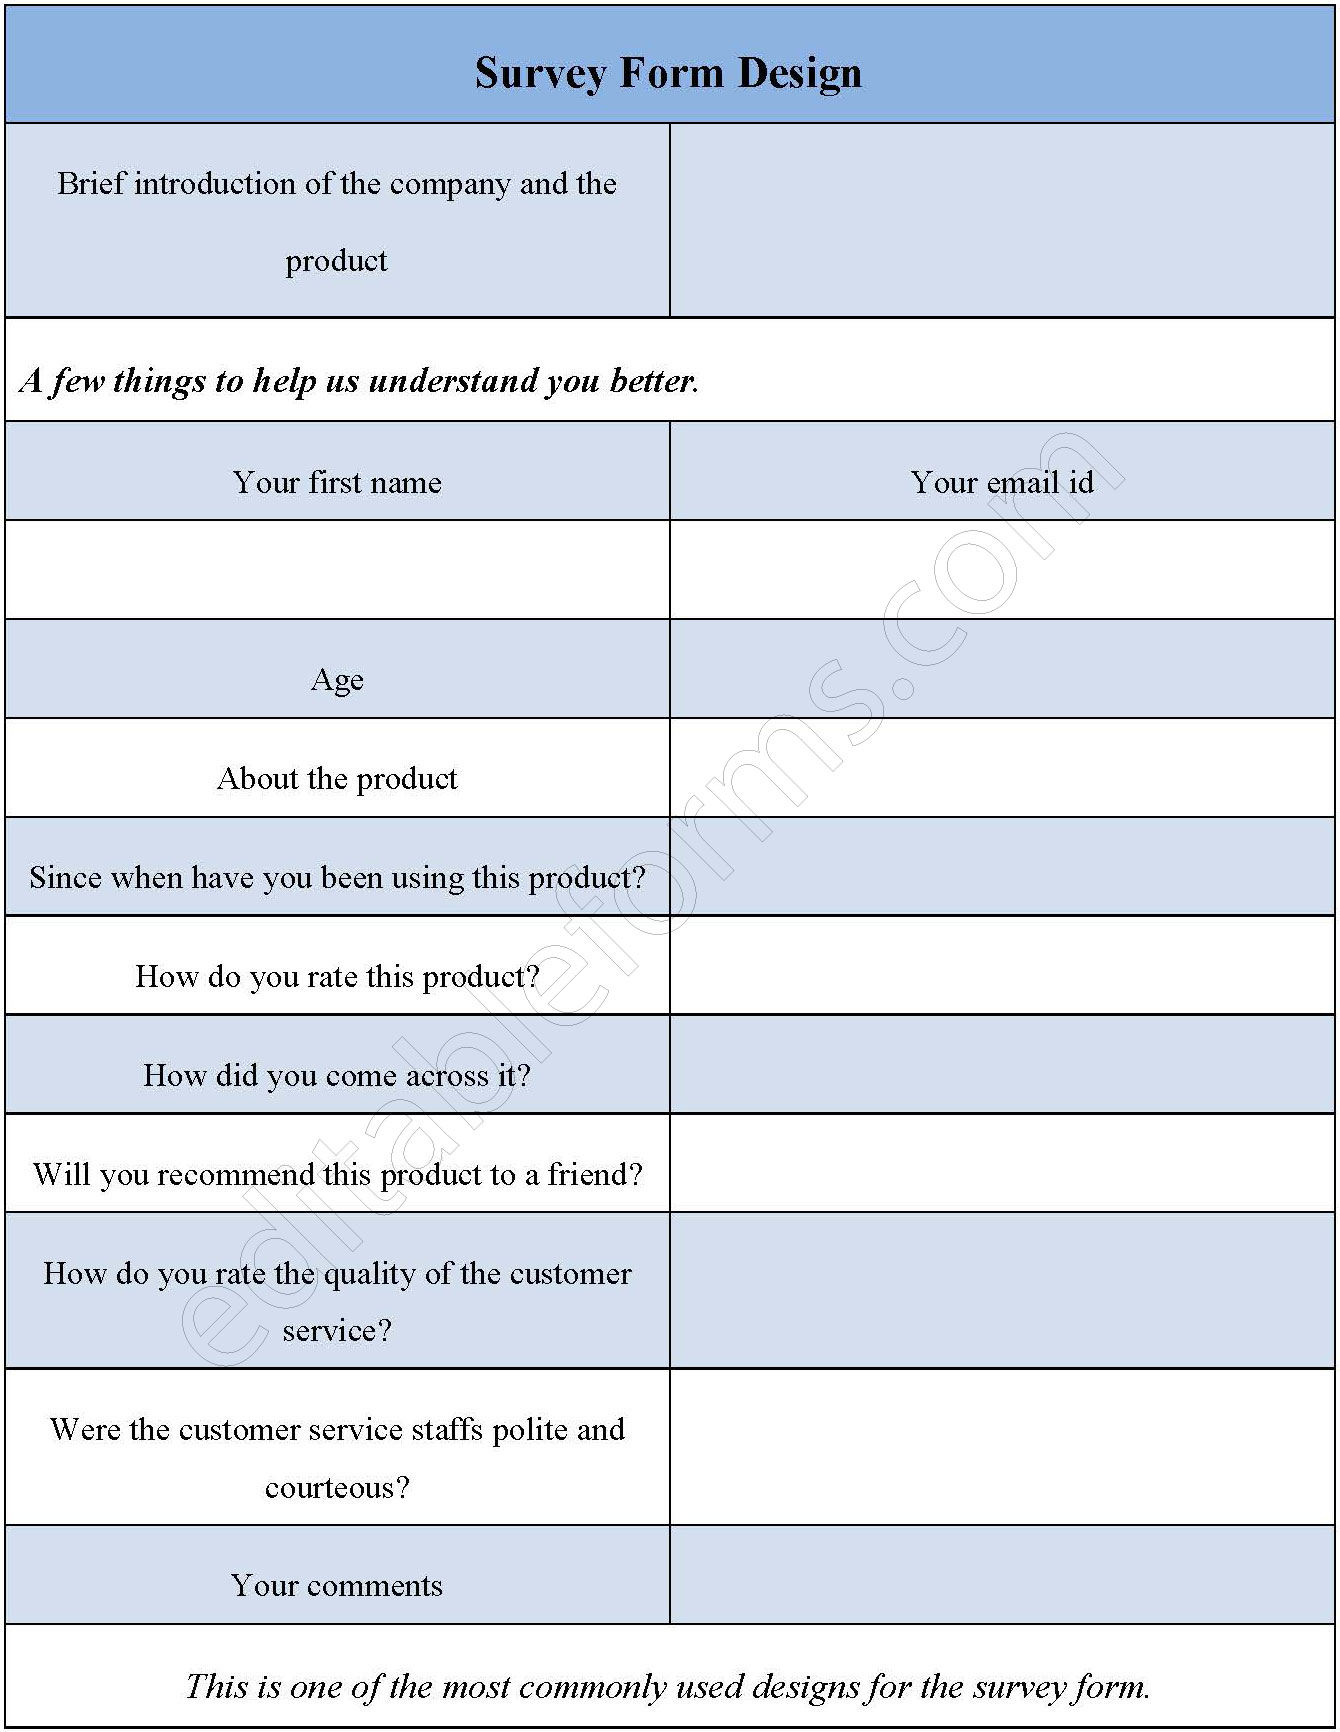 Survey form design